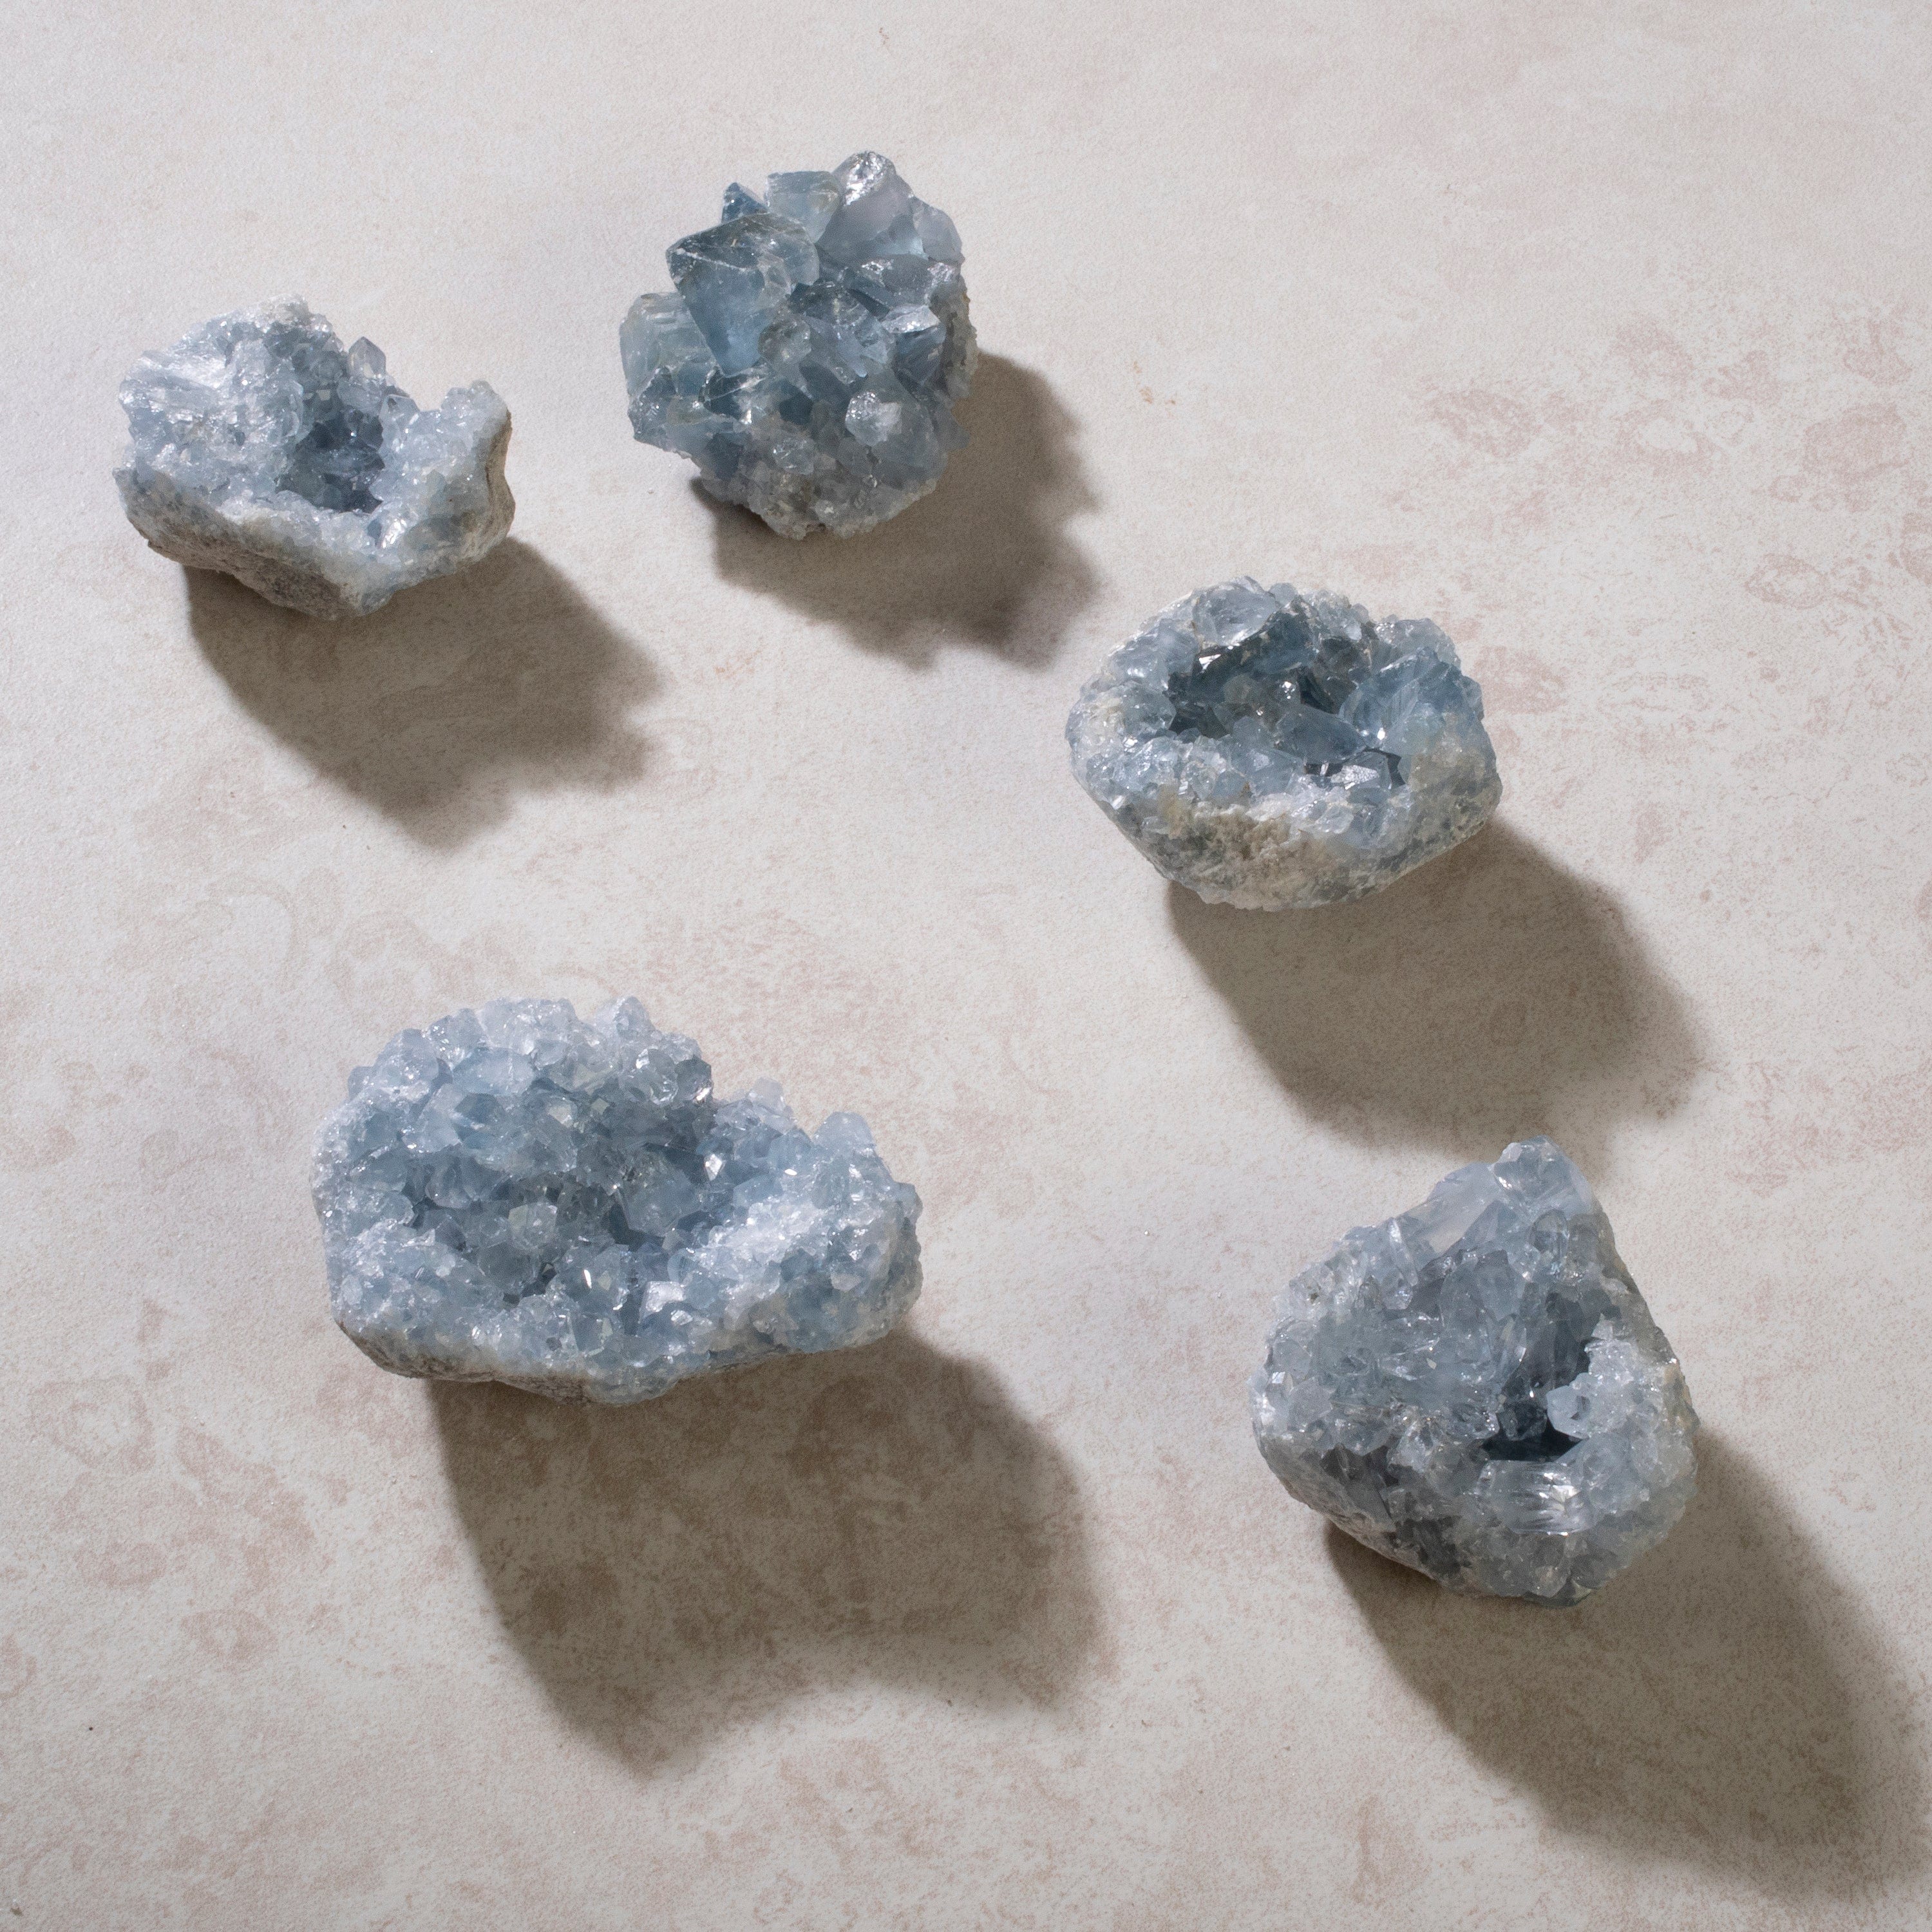 Kalifano Celestite Natural Celestite Crystal Cluster Geode - 3 in. CG180